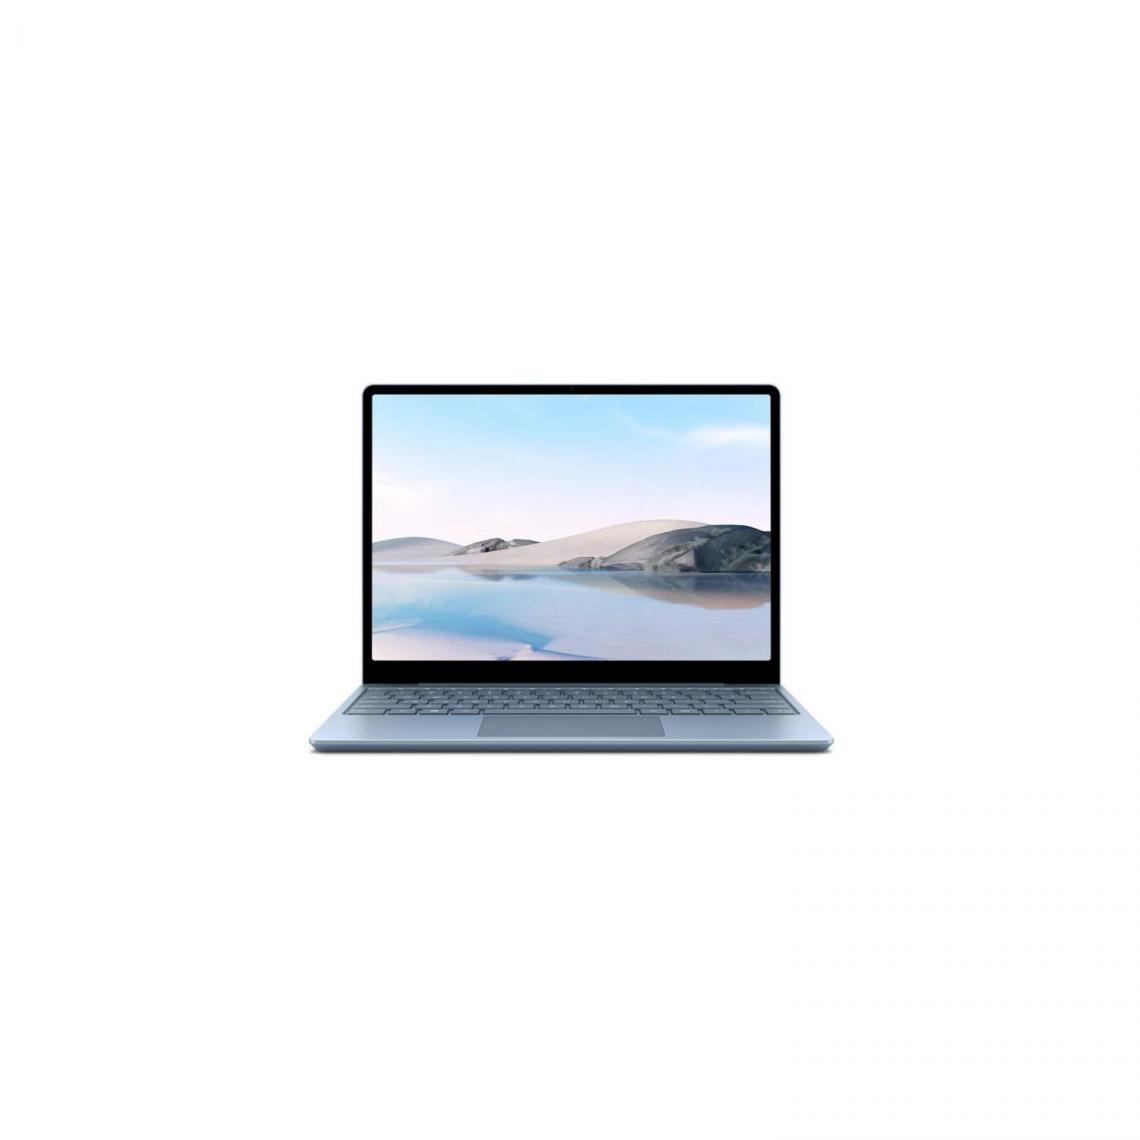 Microsoft - Microsoft Surface Laptop Go - 12,45 - Intel Core i5 1035G1 - RAM 8Go - Stockage 256Go SSD - Bleu glacier - Windows 10 - PC Portable